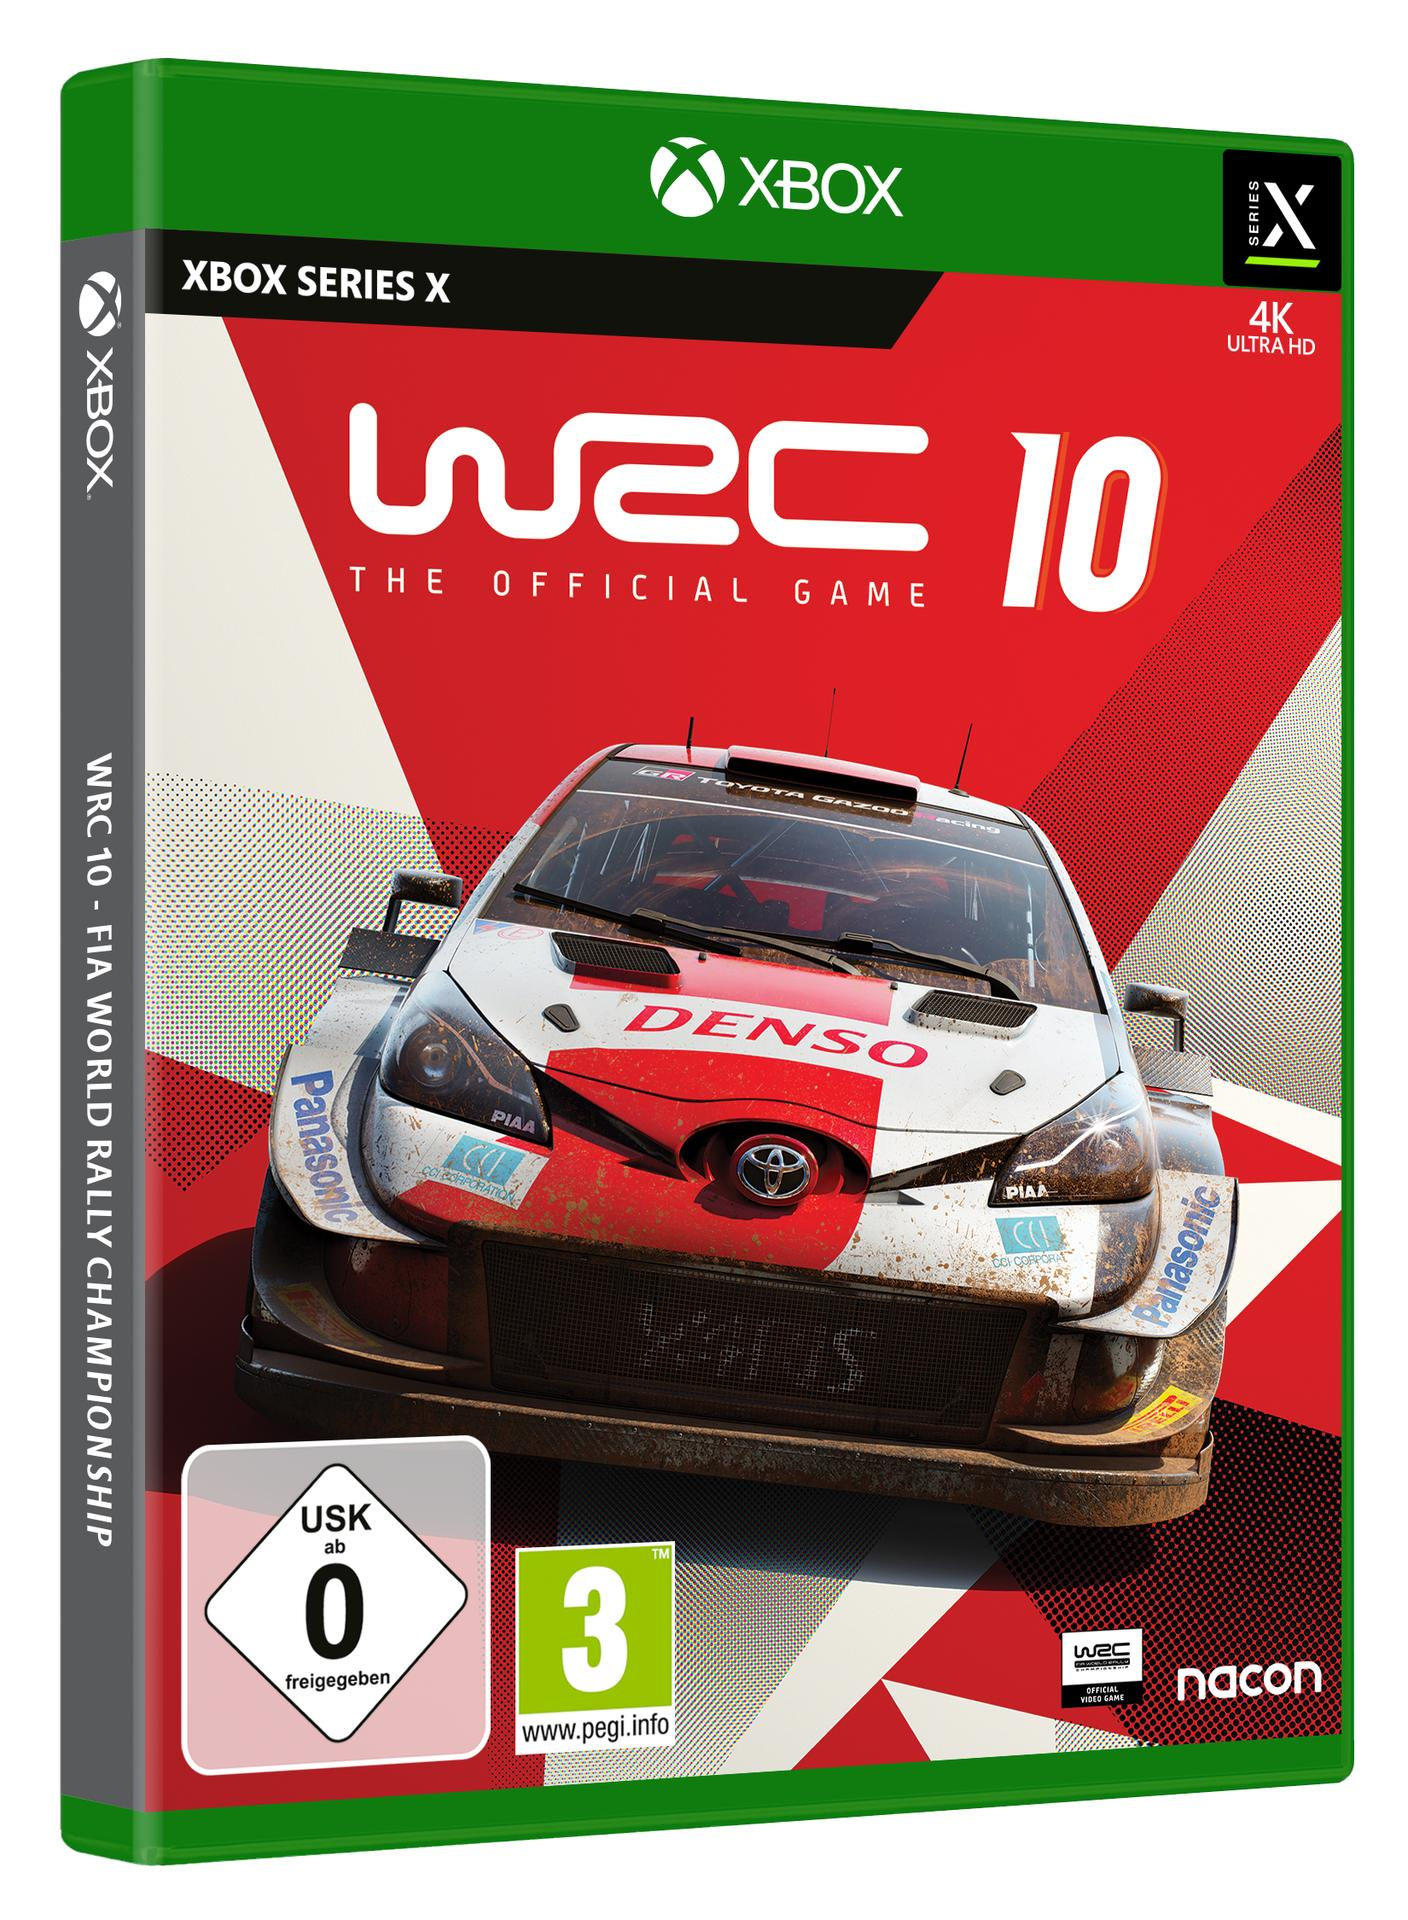 X] WRC Series - 10 [Xbox